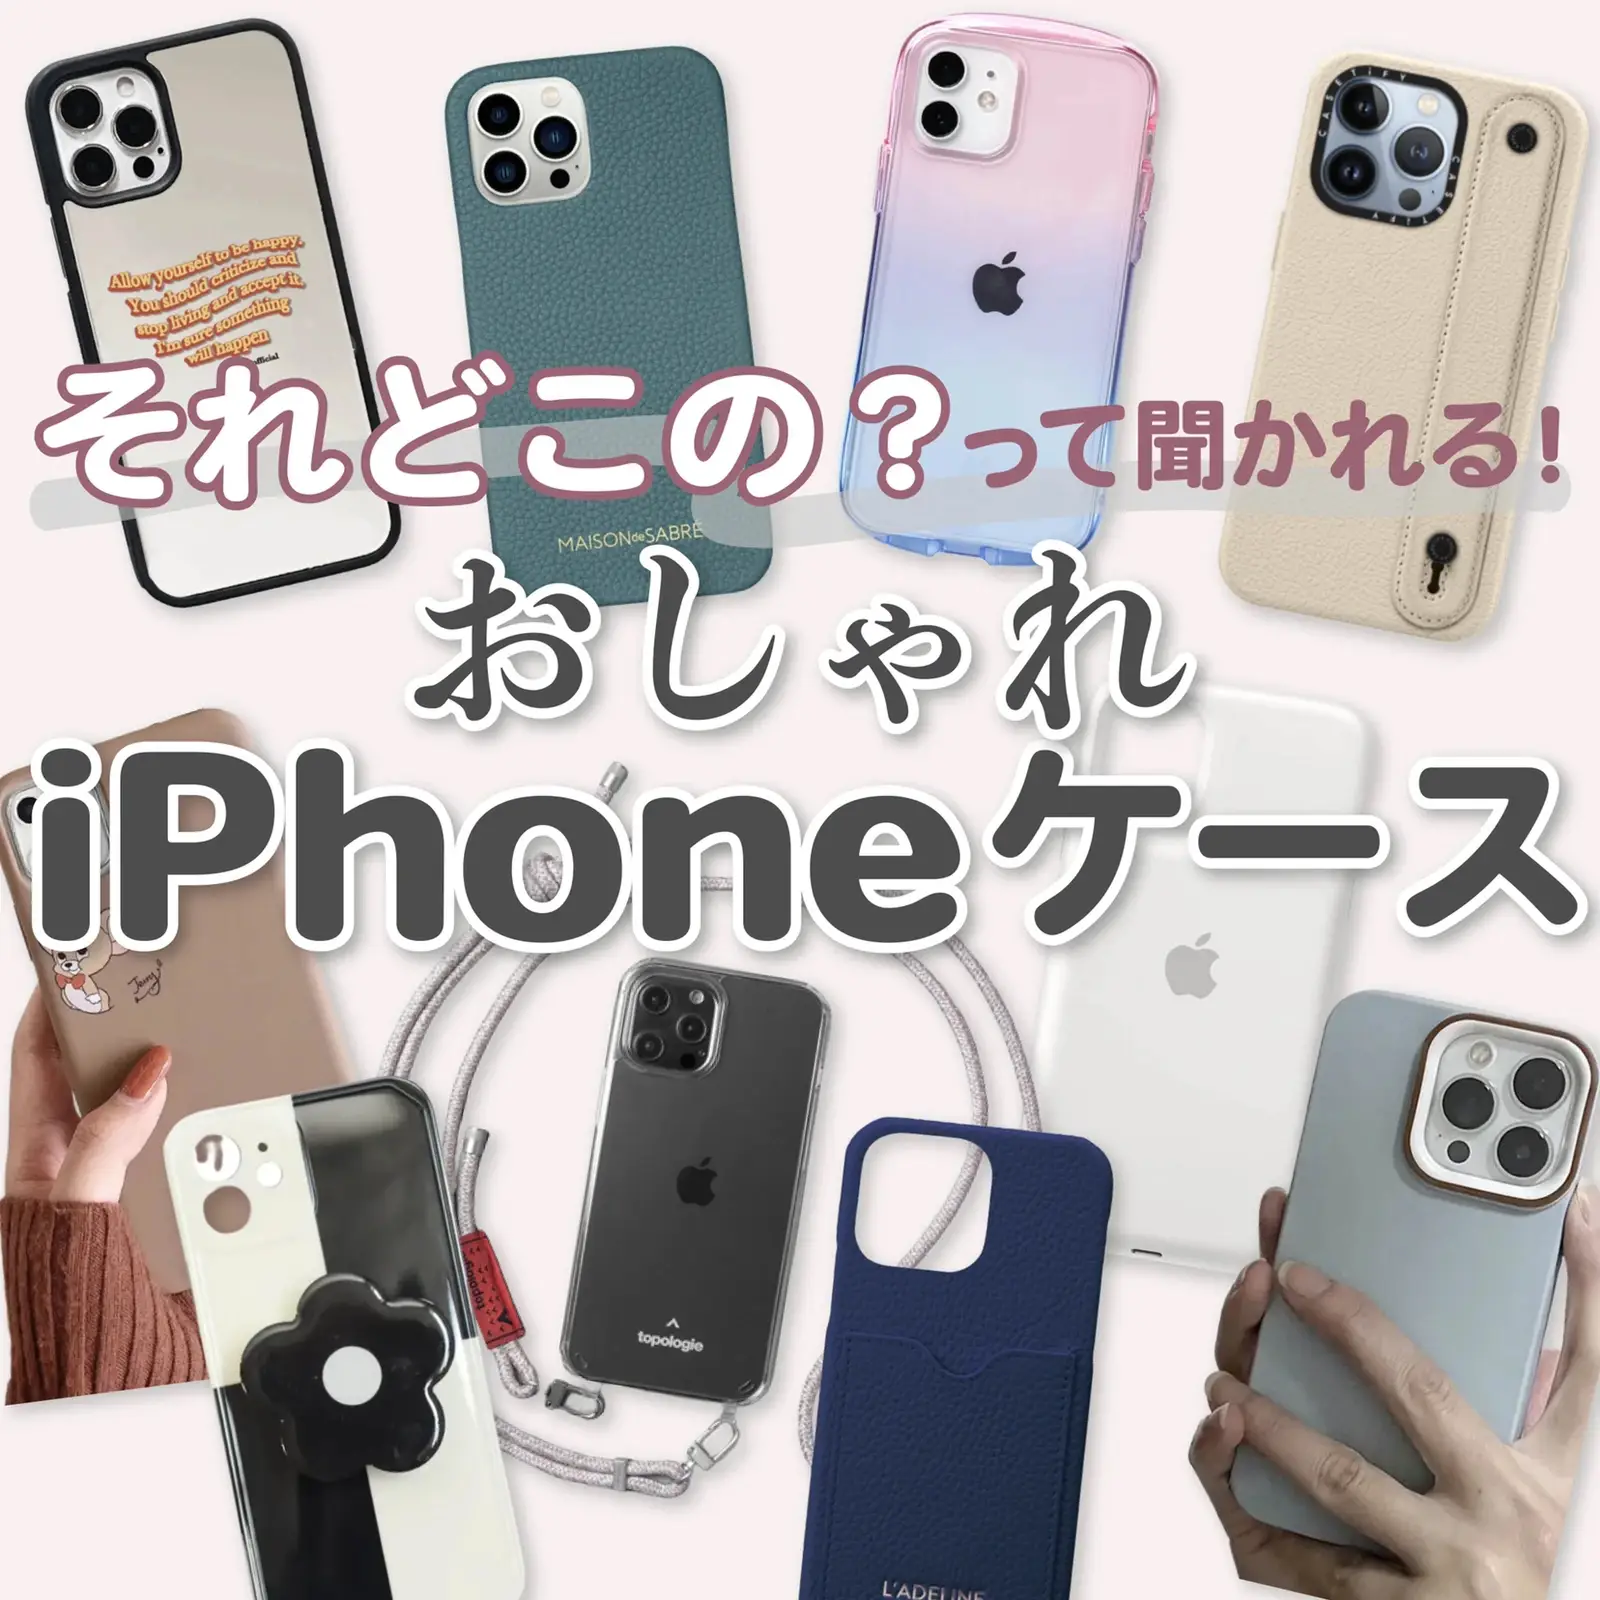 Iphone12 Pro 用カバー - Lemon8検索